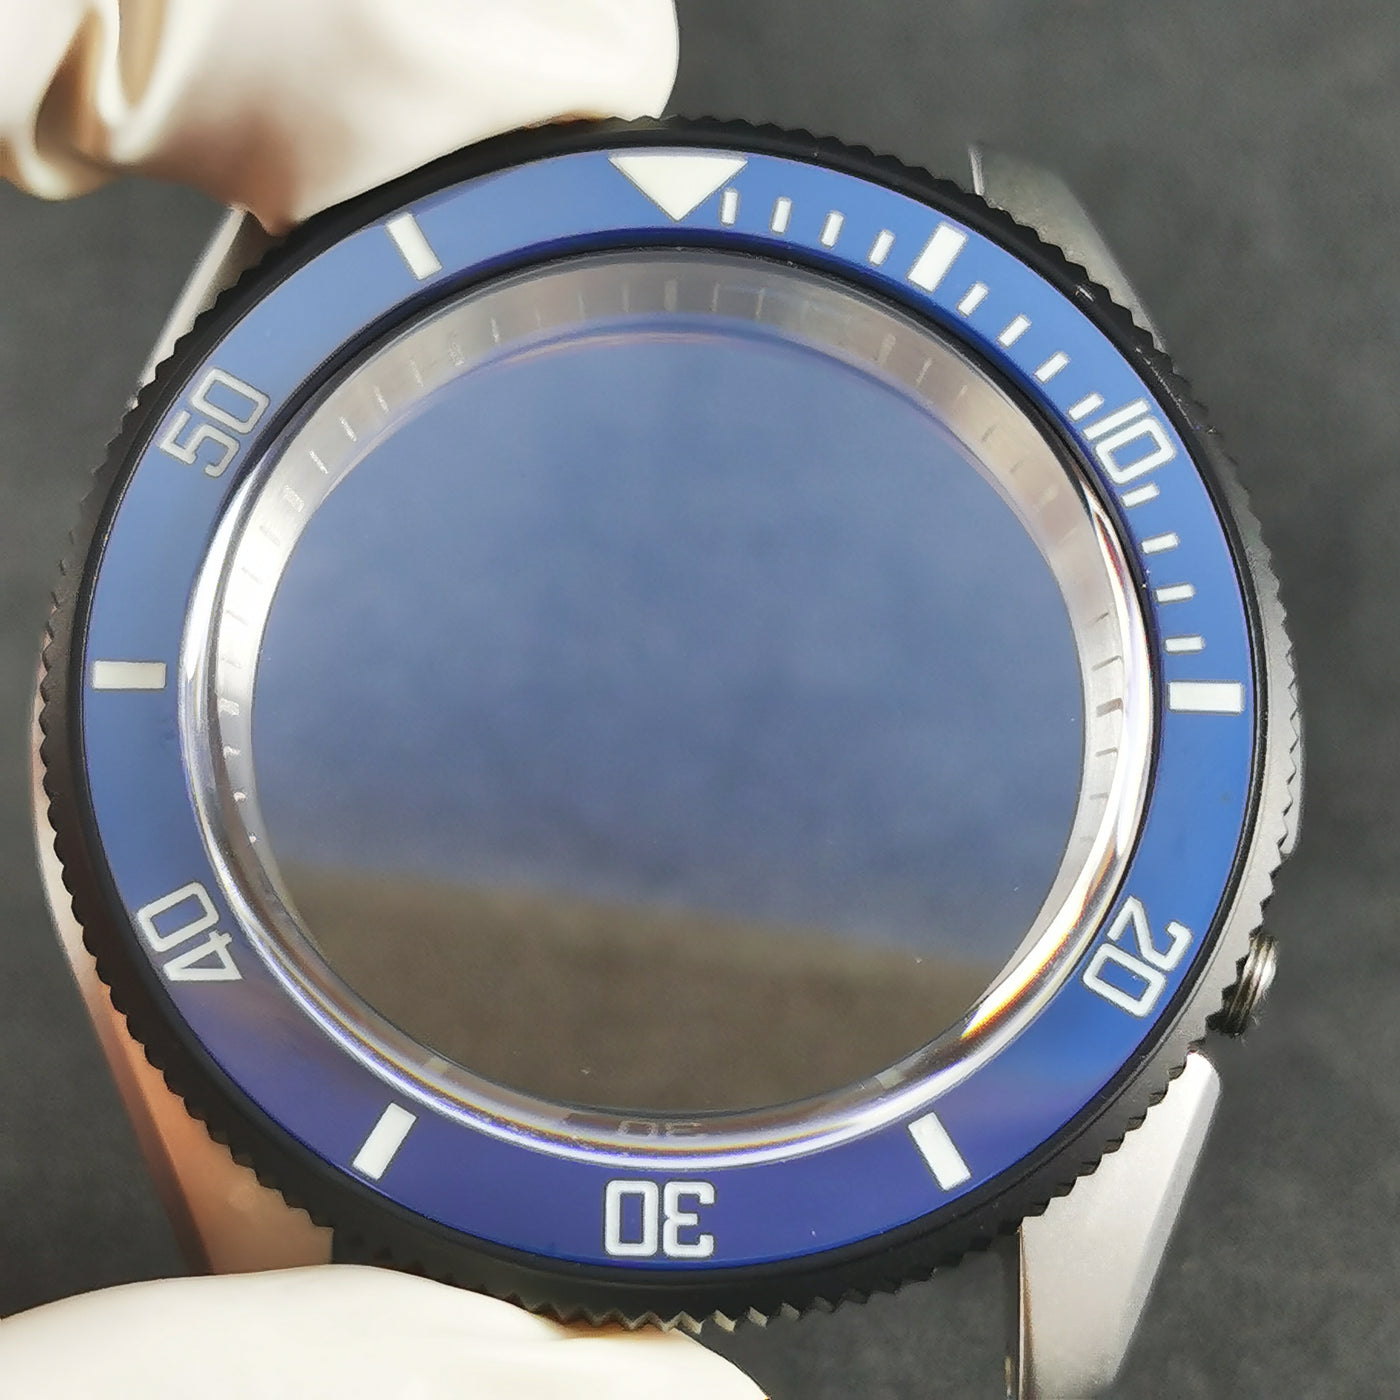 CI0527 SKX007/SRPD Luminous Sub Style Dark Blue Ceramic Bezel Insert